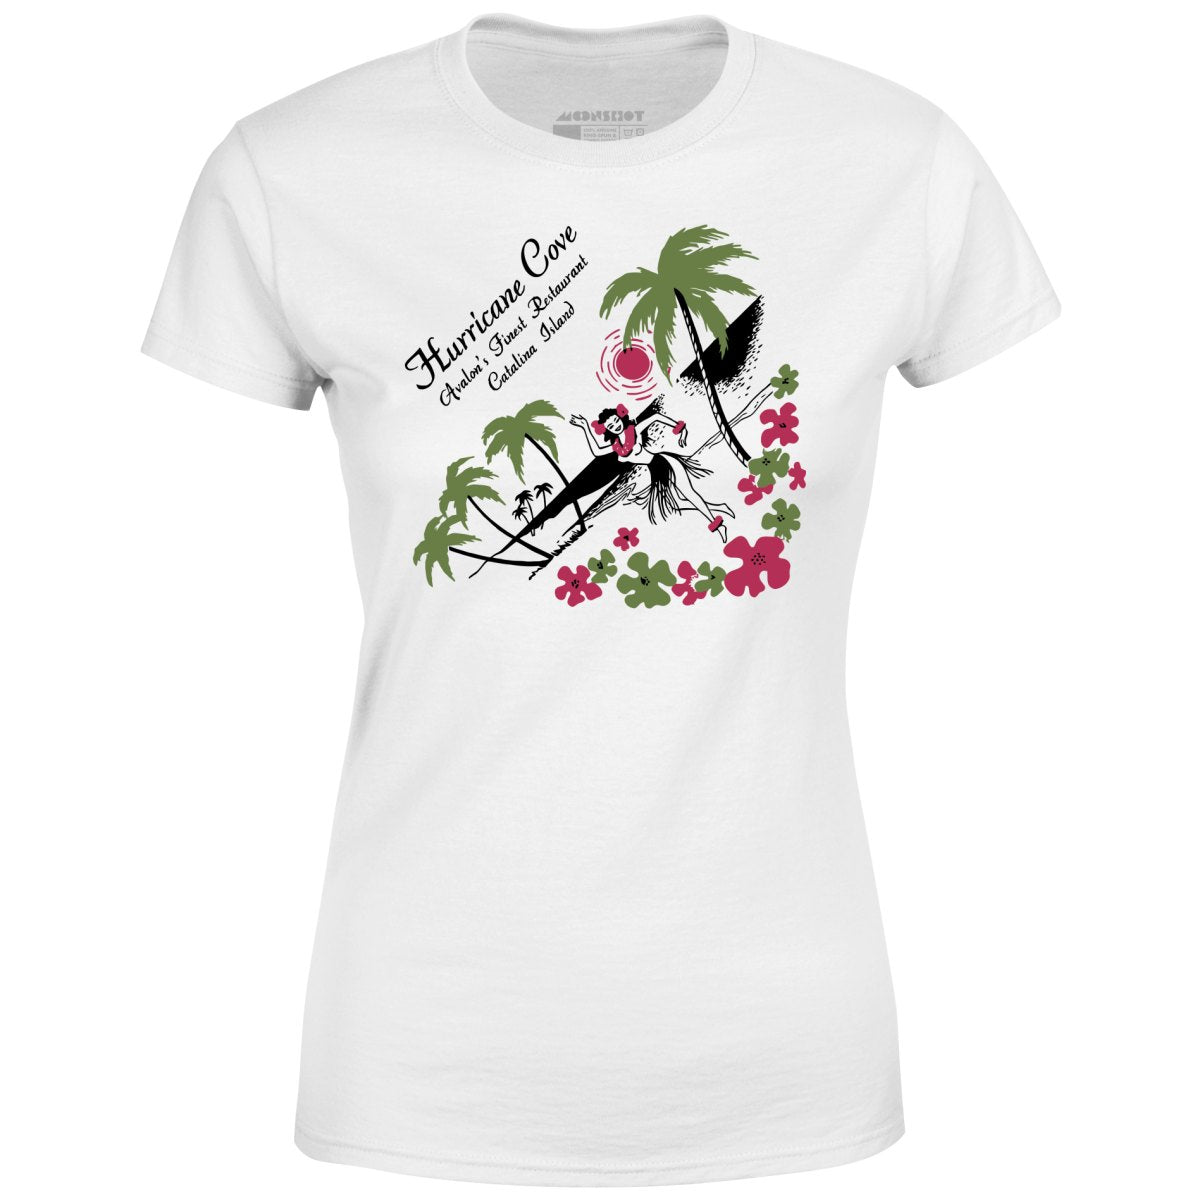 Hurricane Cove - Catalina Island, CA - Vintage Tiki Bar - Women's T-Shirt